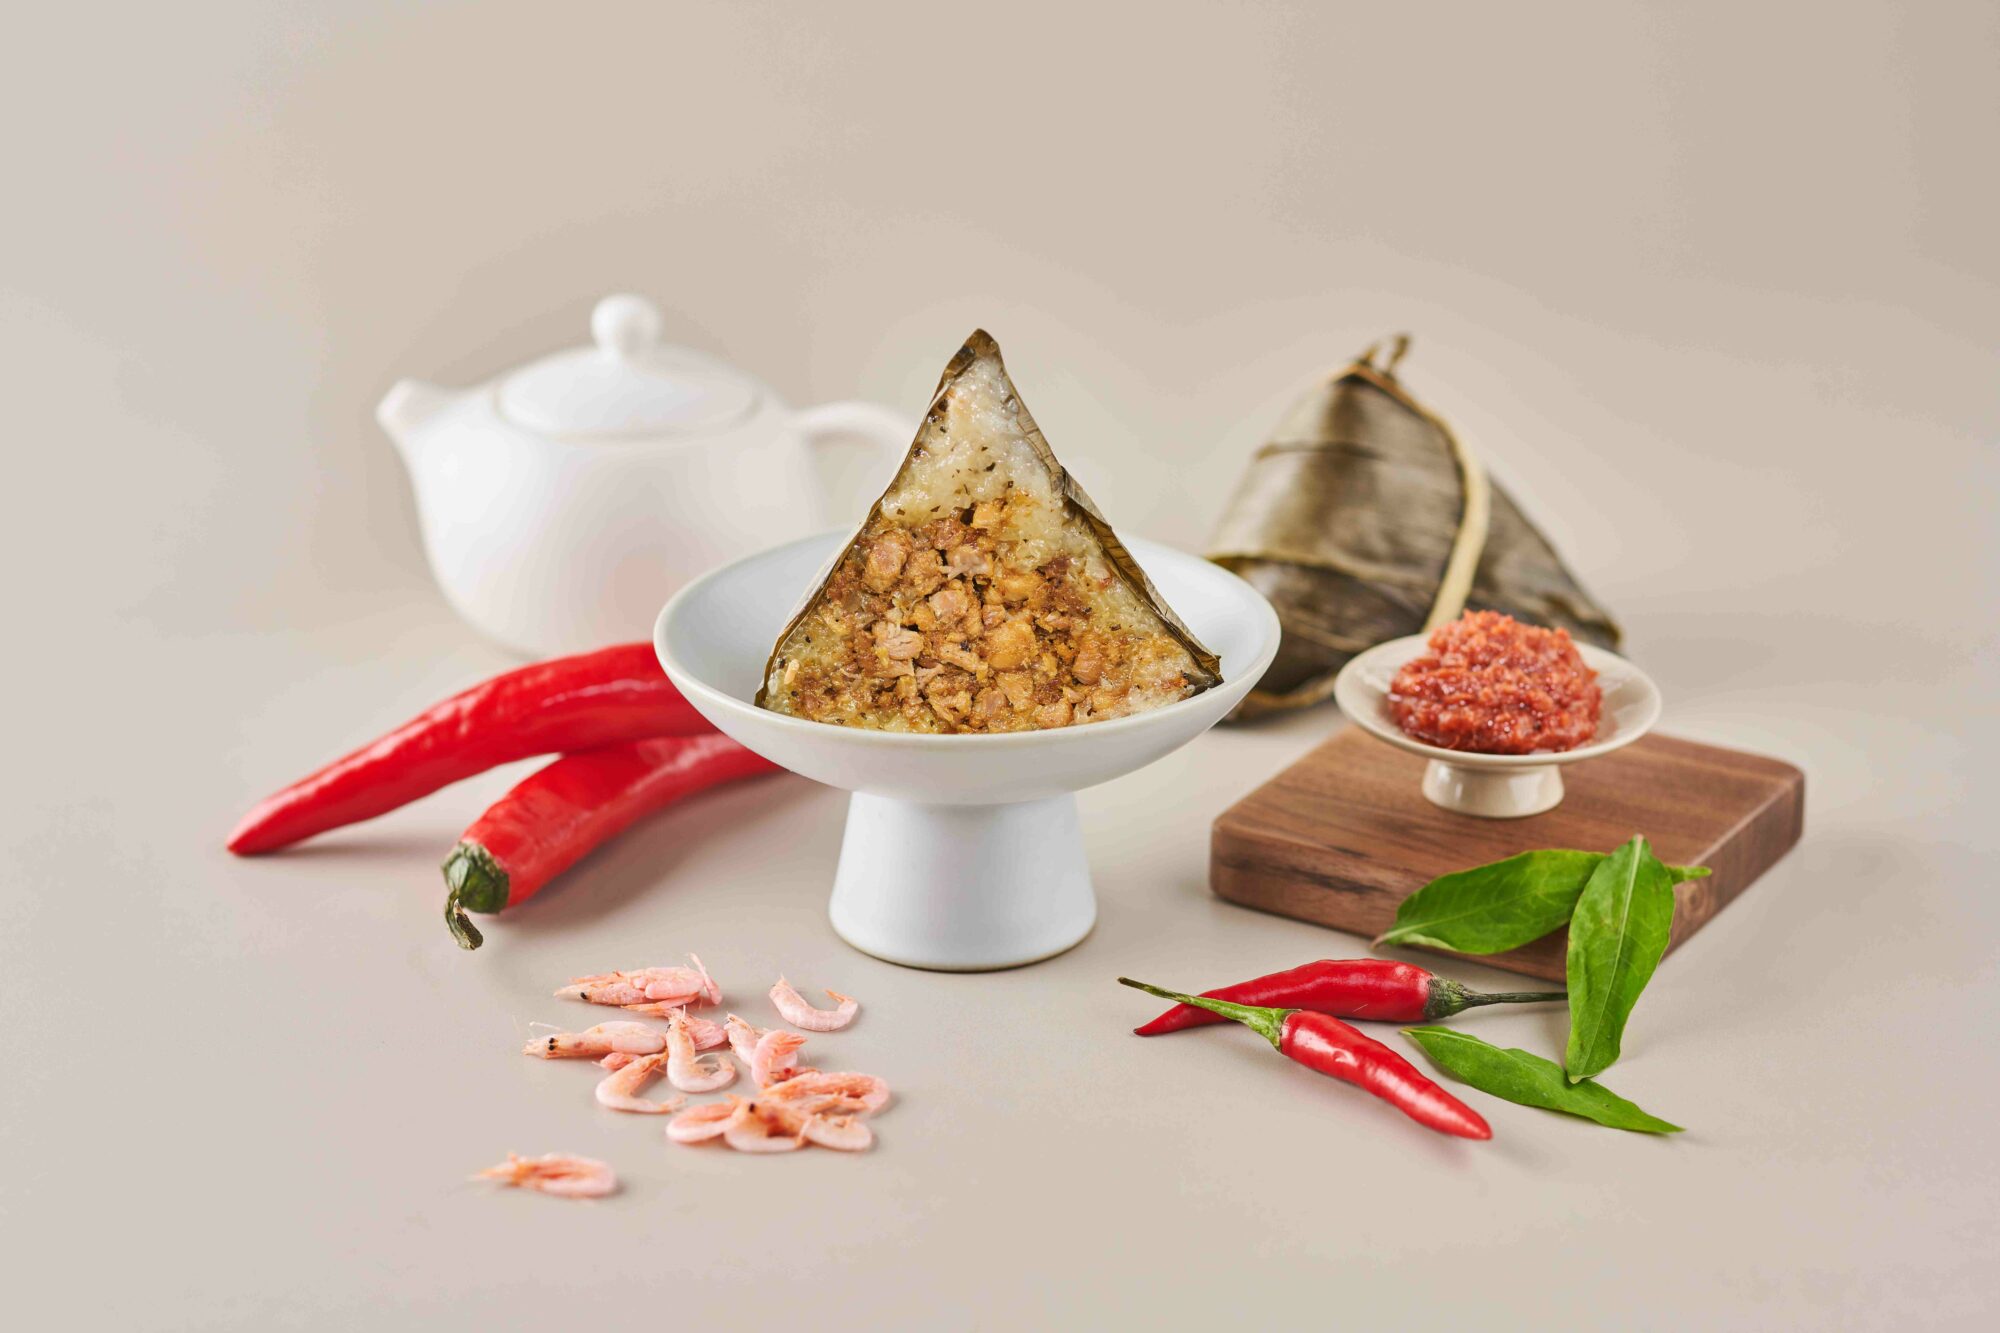 Goodwood Park Hotel - Laksa Dumpling with Sambal Chilli (1)